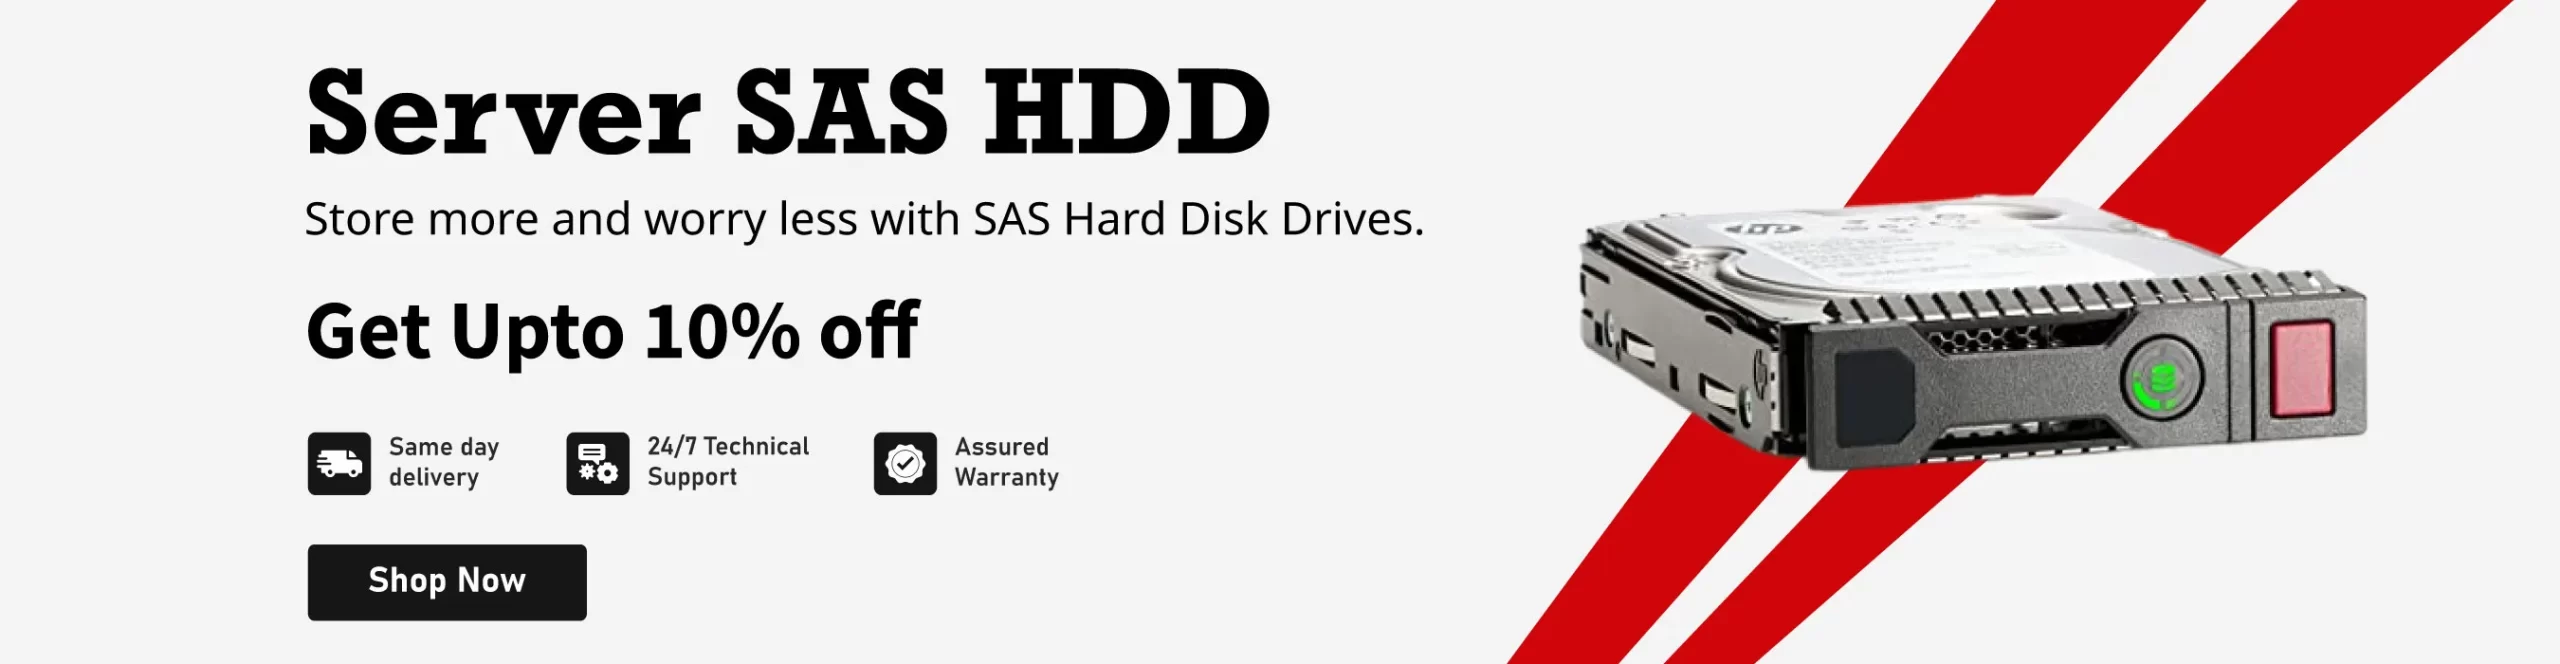 Server SAS HDD